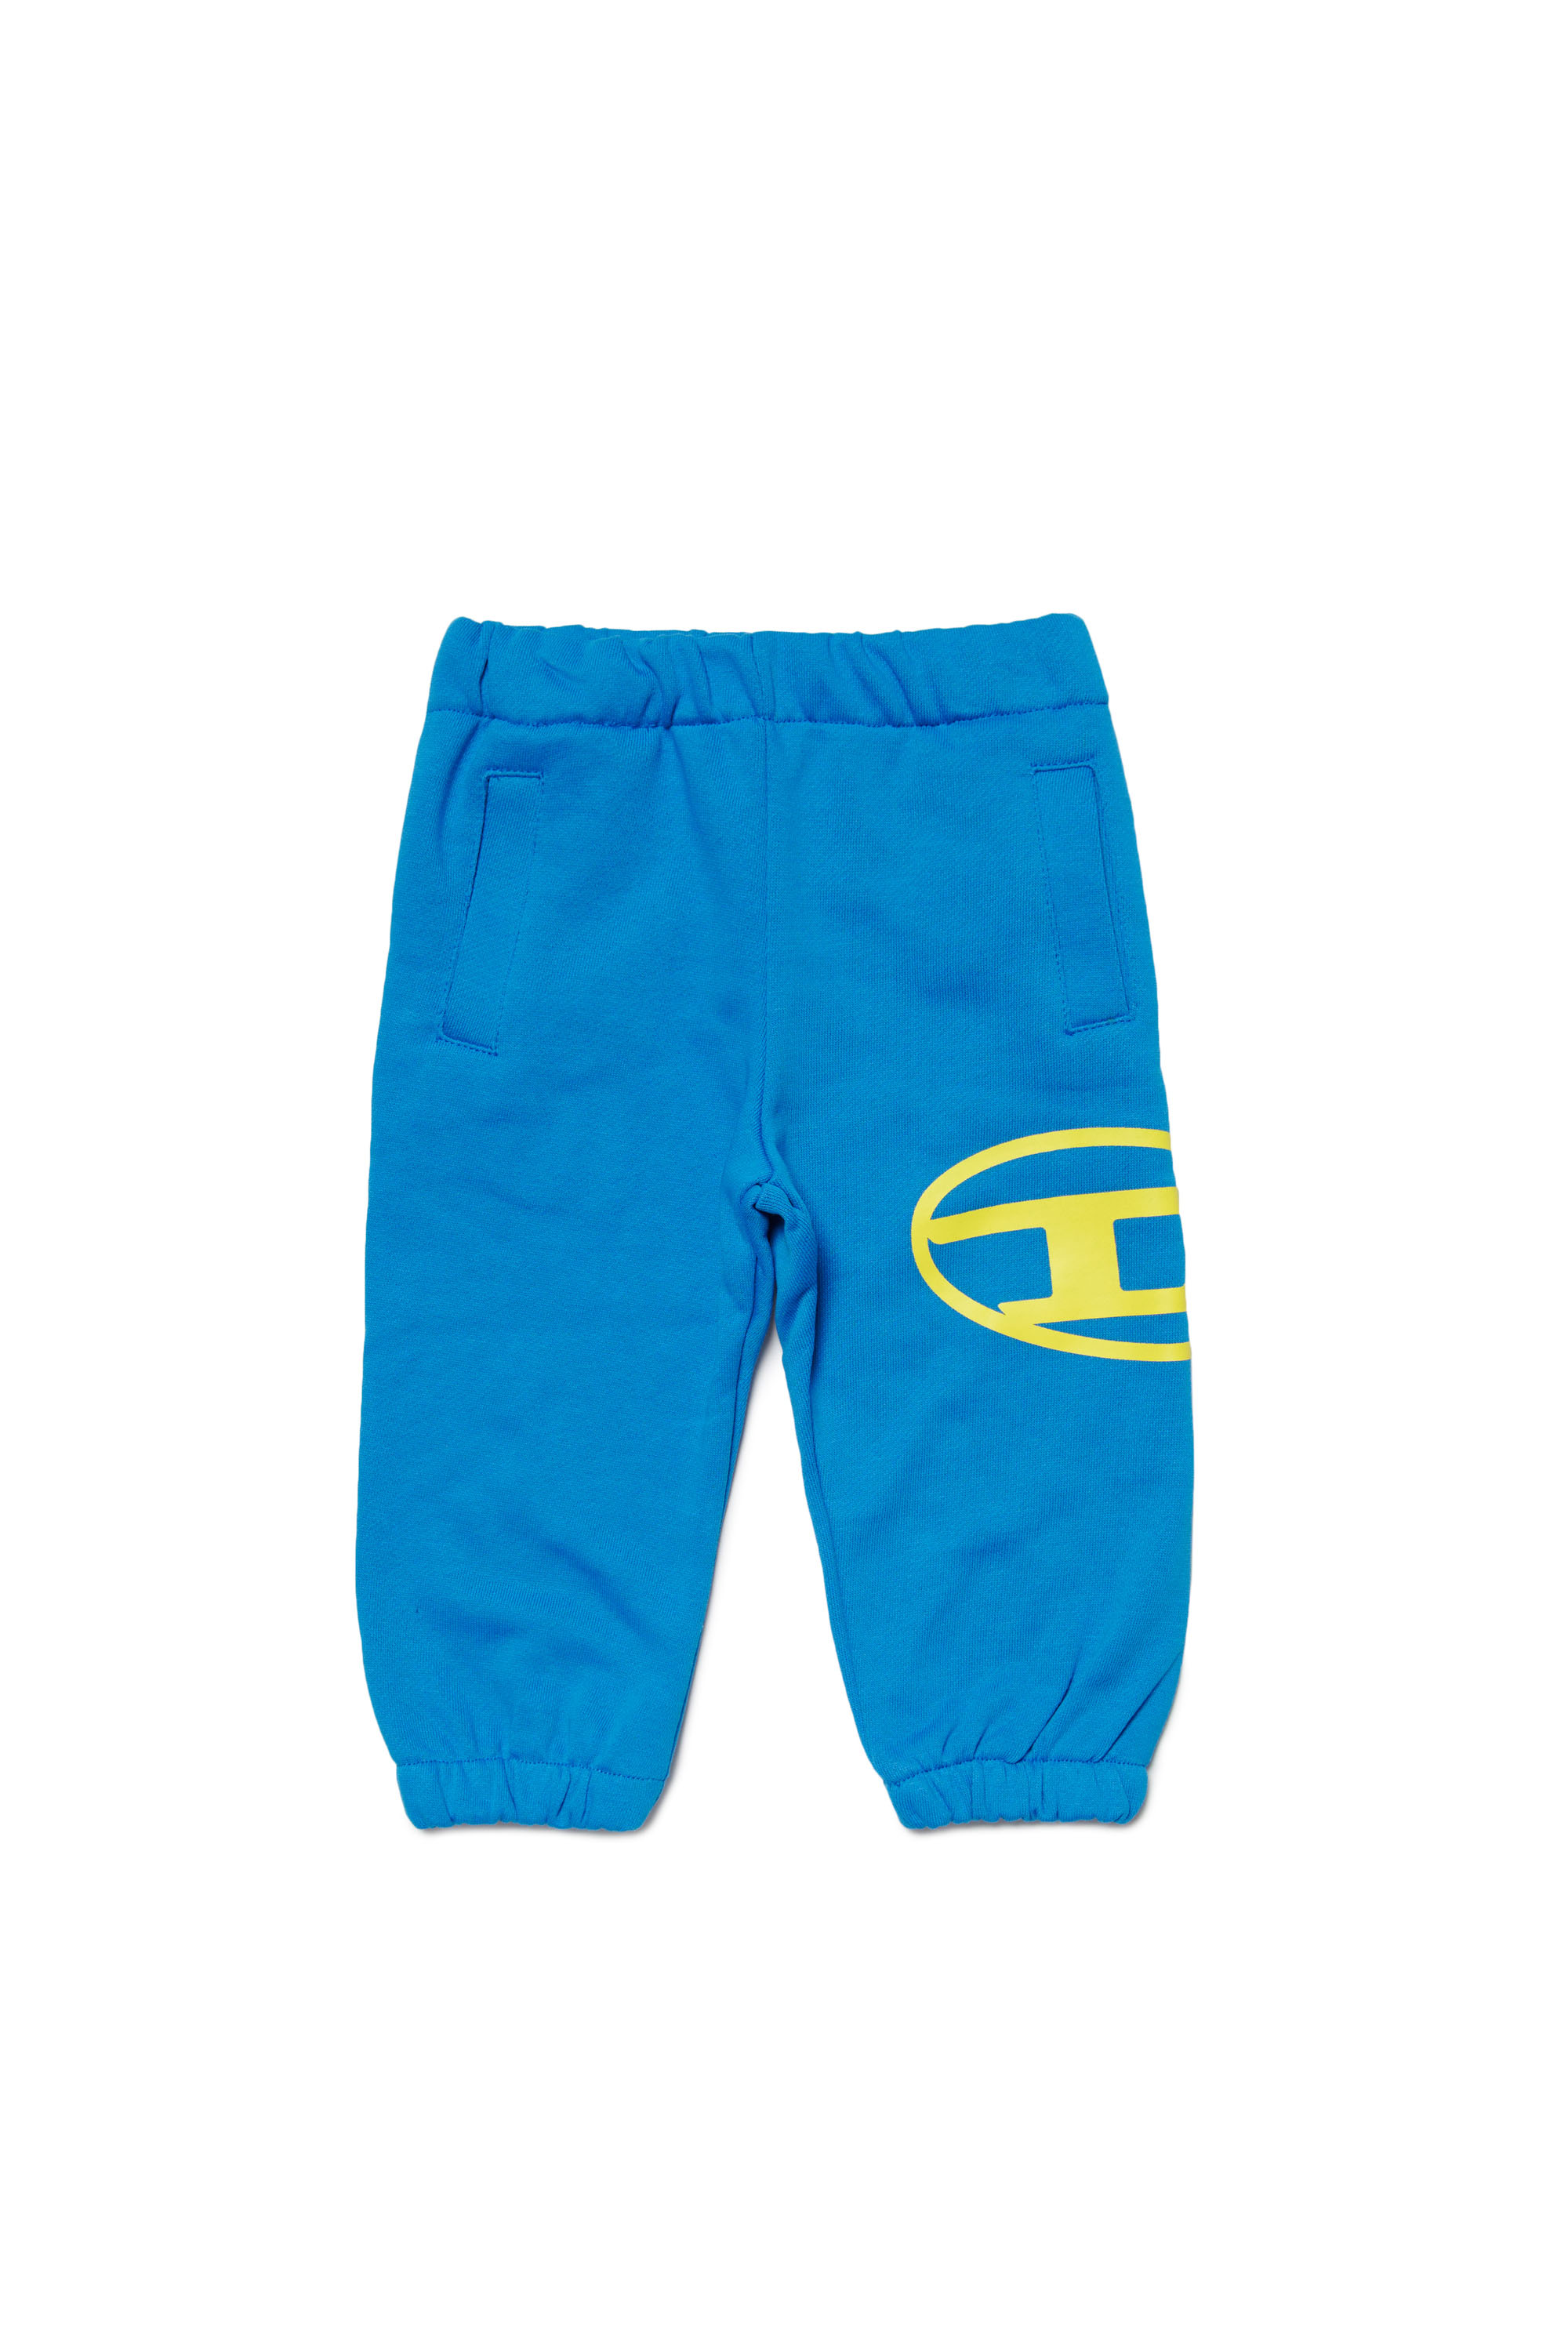 Diesel - Pantalones deportivos con logotipo Oval D - Pantalones - Unisex - Azul marino